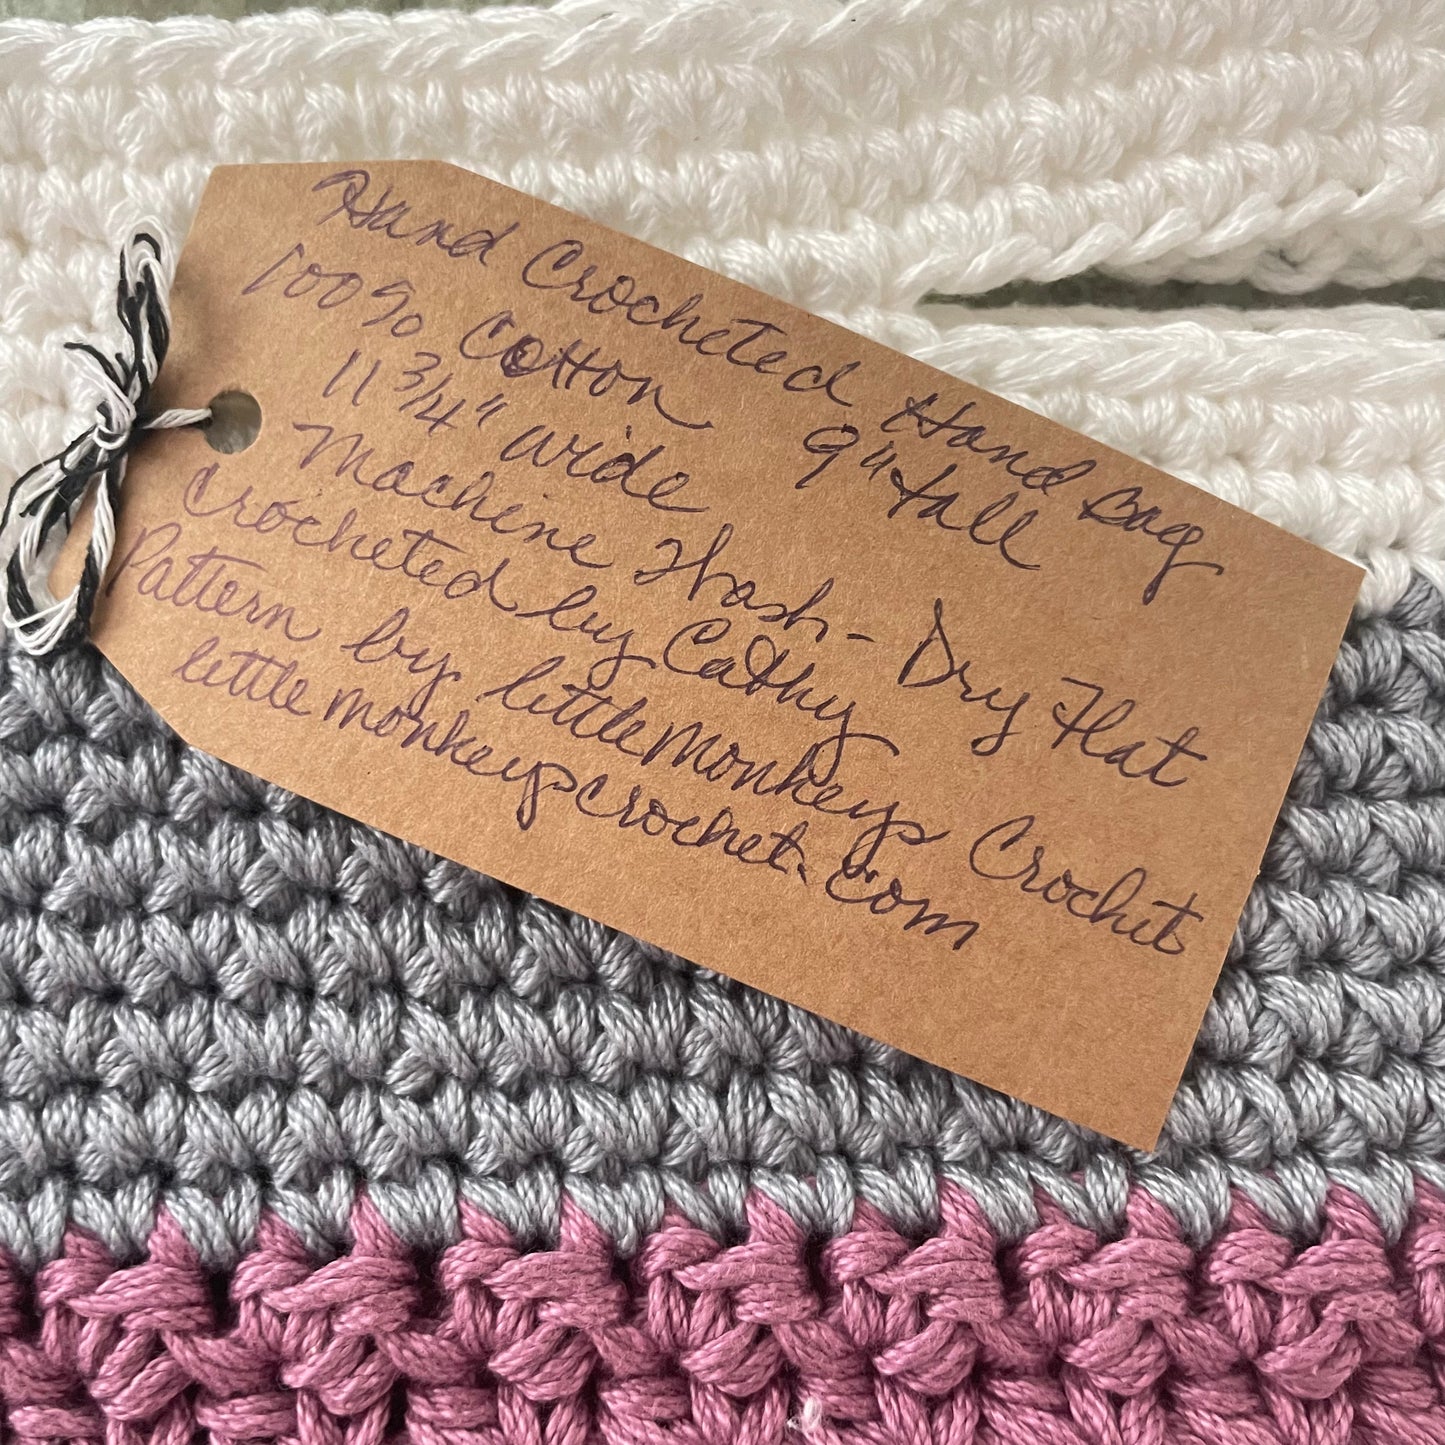 Colorblock Hand Crocheted Handled Purse Medium Knit Handbag Boho Minimalist Chic Cottagecore Violet White Gray 100% Cotton